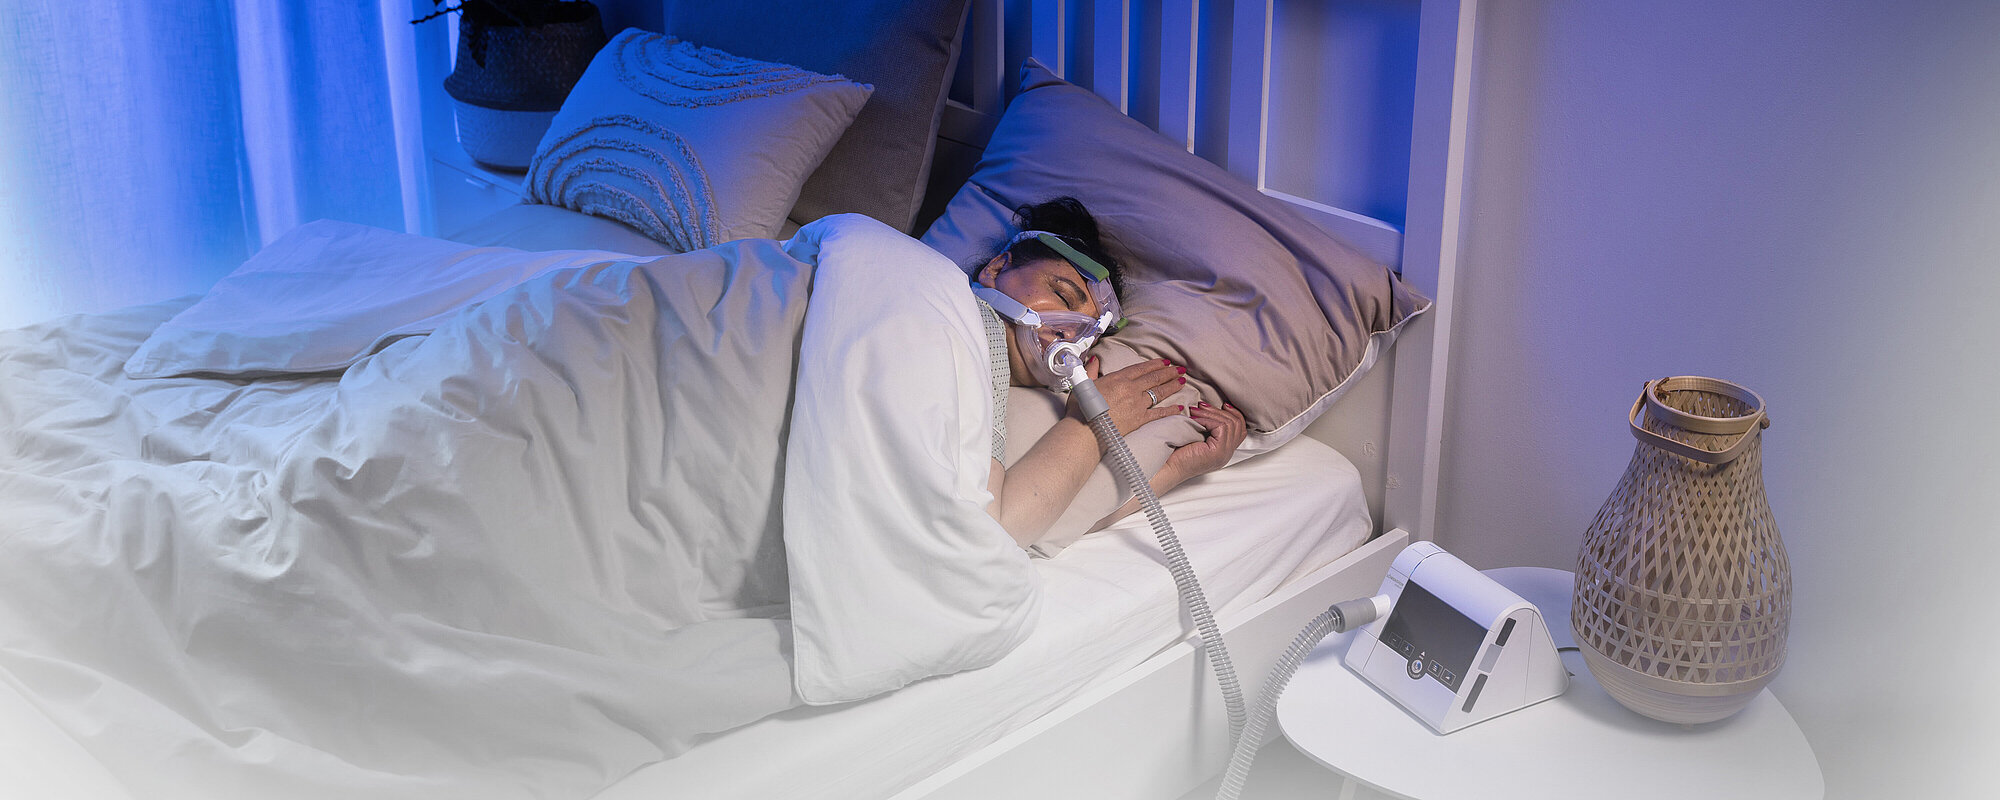 lena mask patient interface fullface prisma wireless woman sleeping 